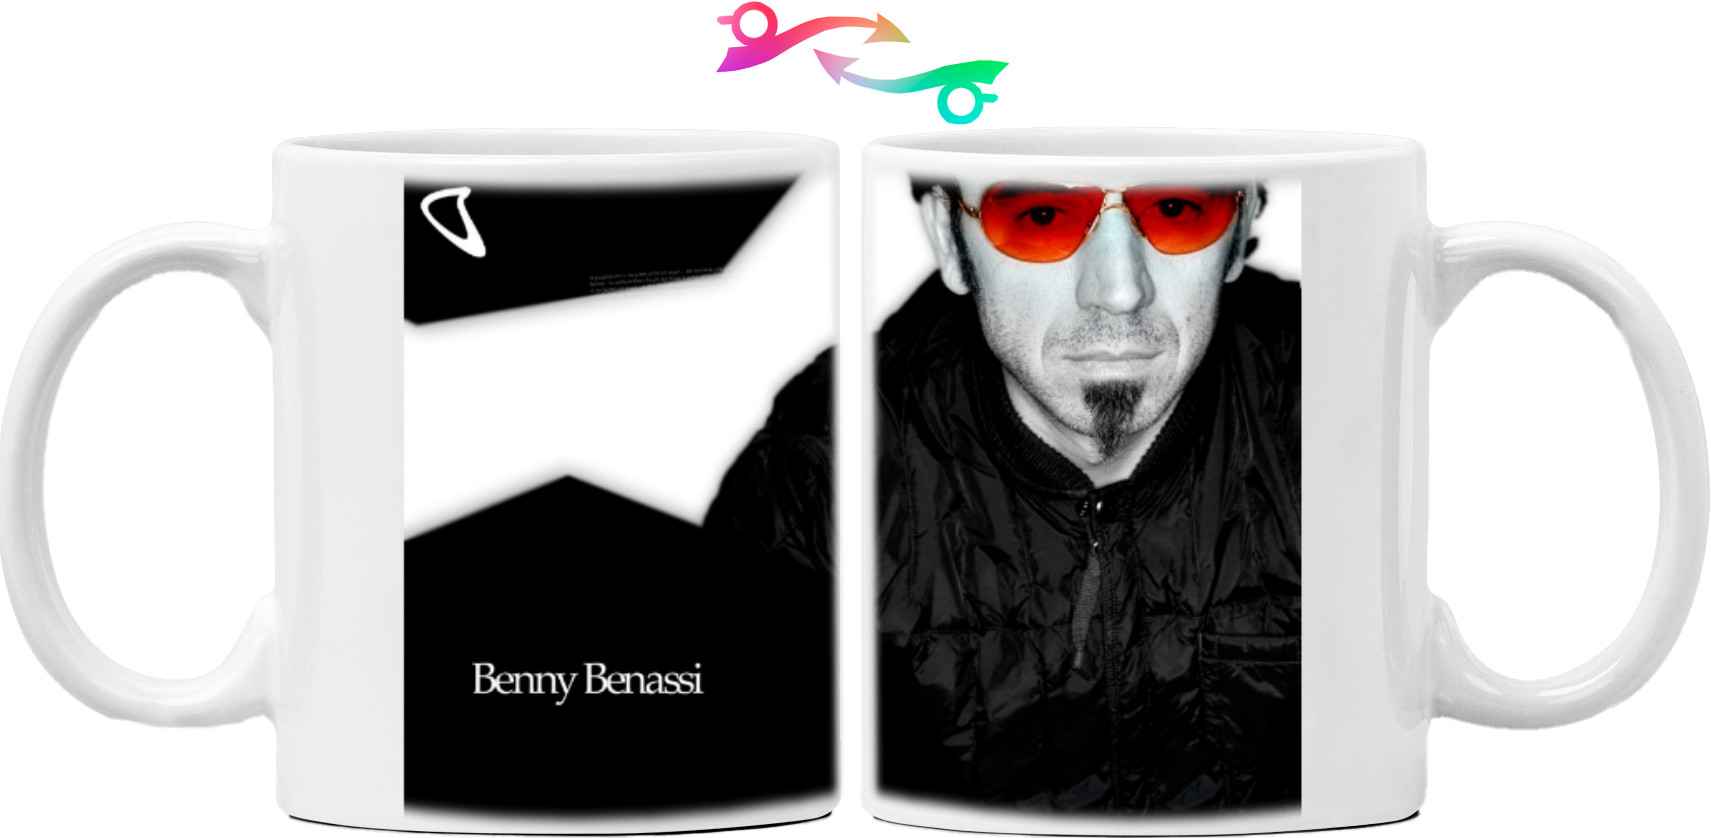 Benny Benassi - 2